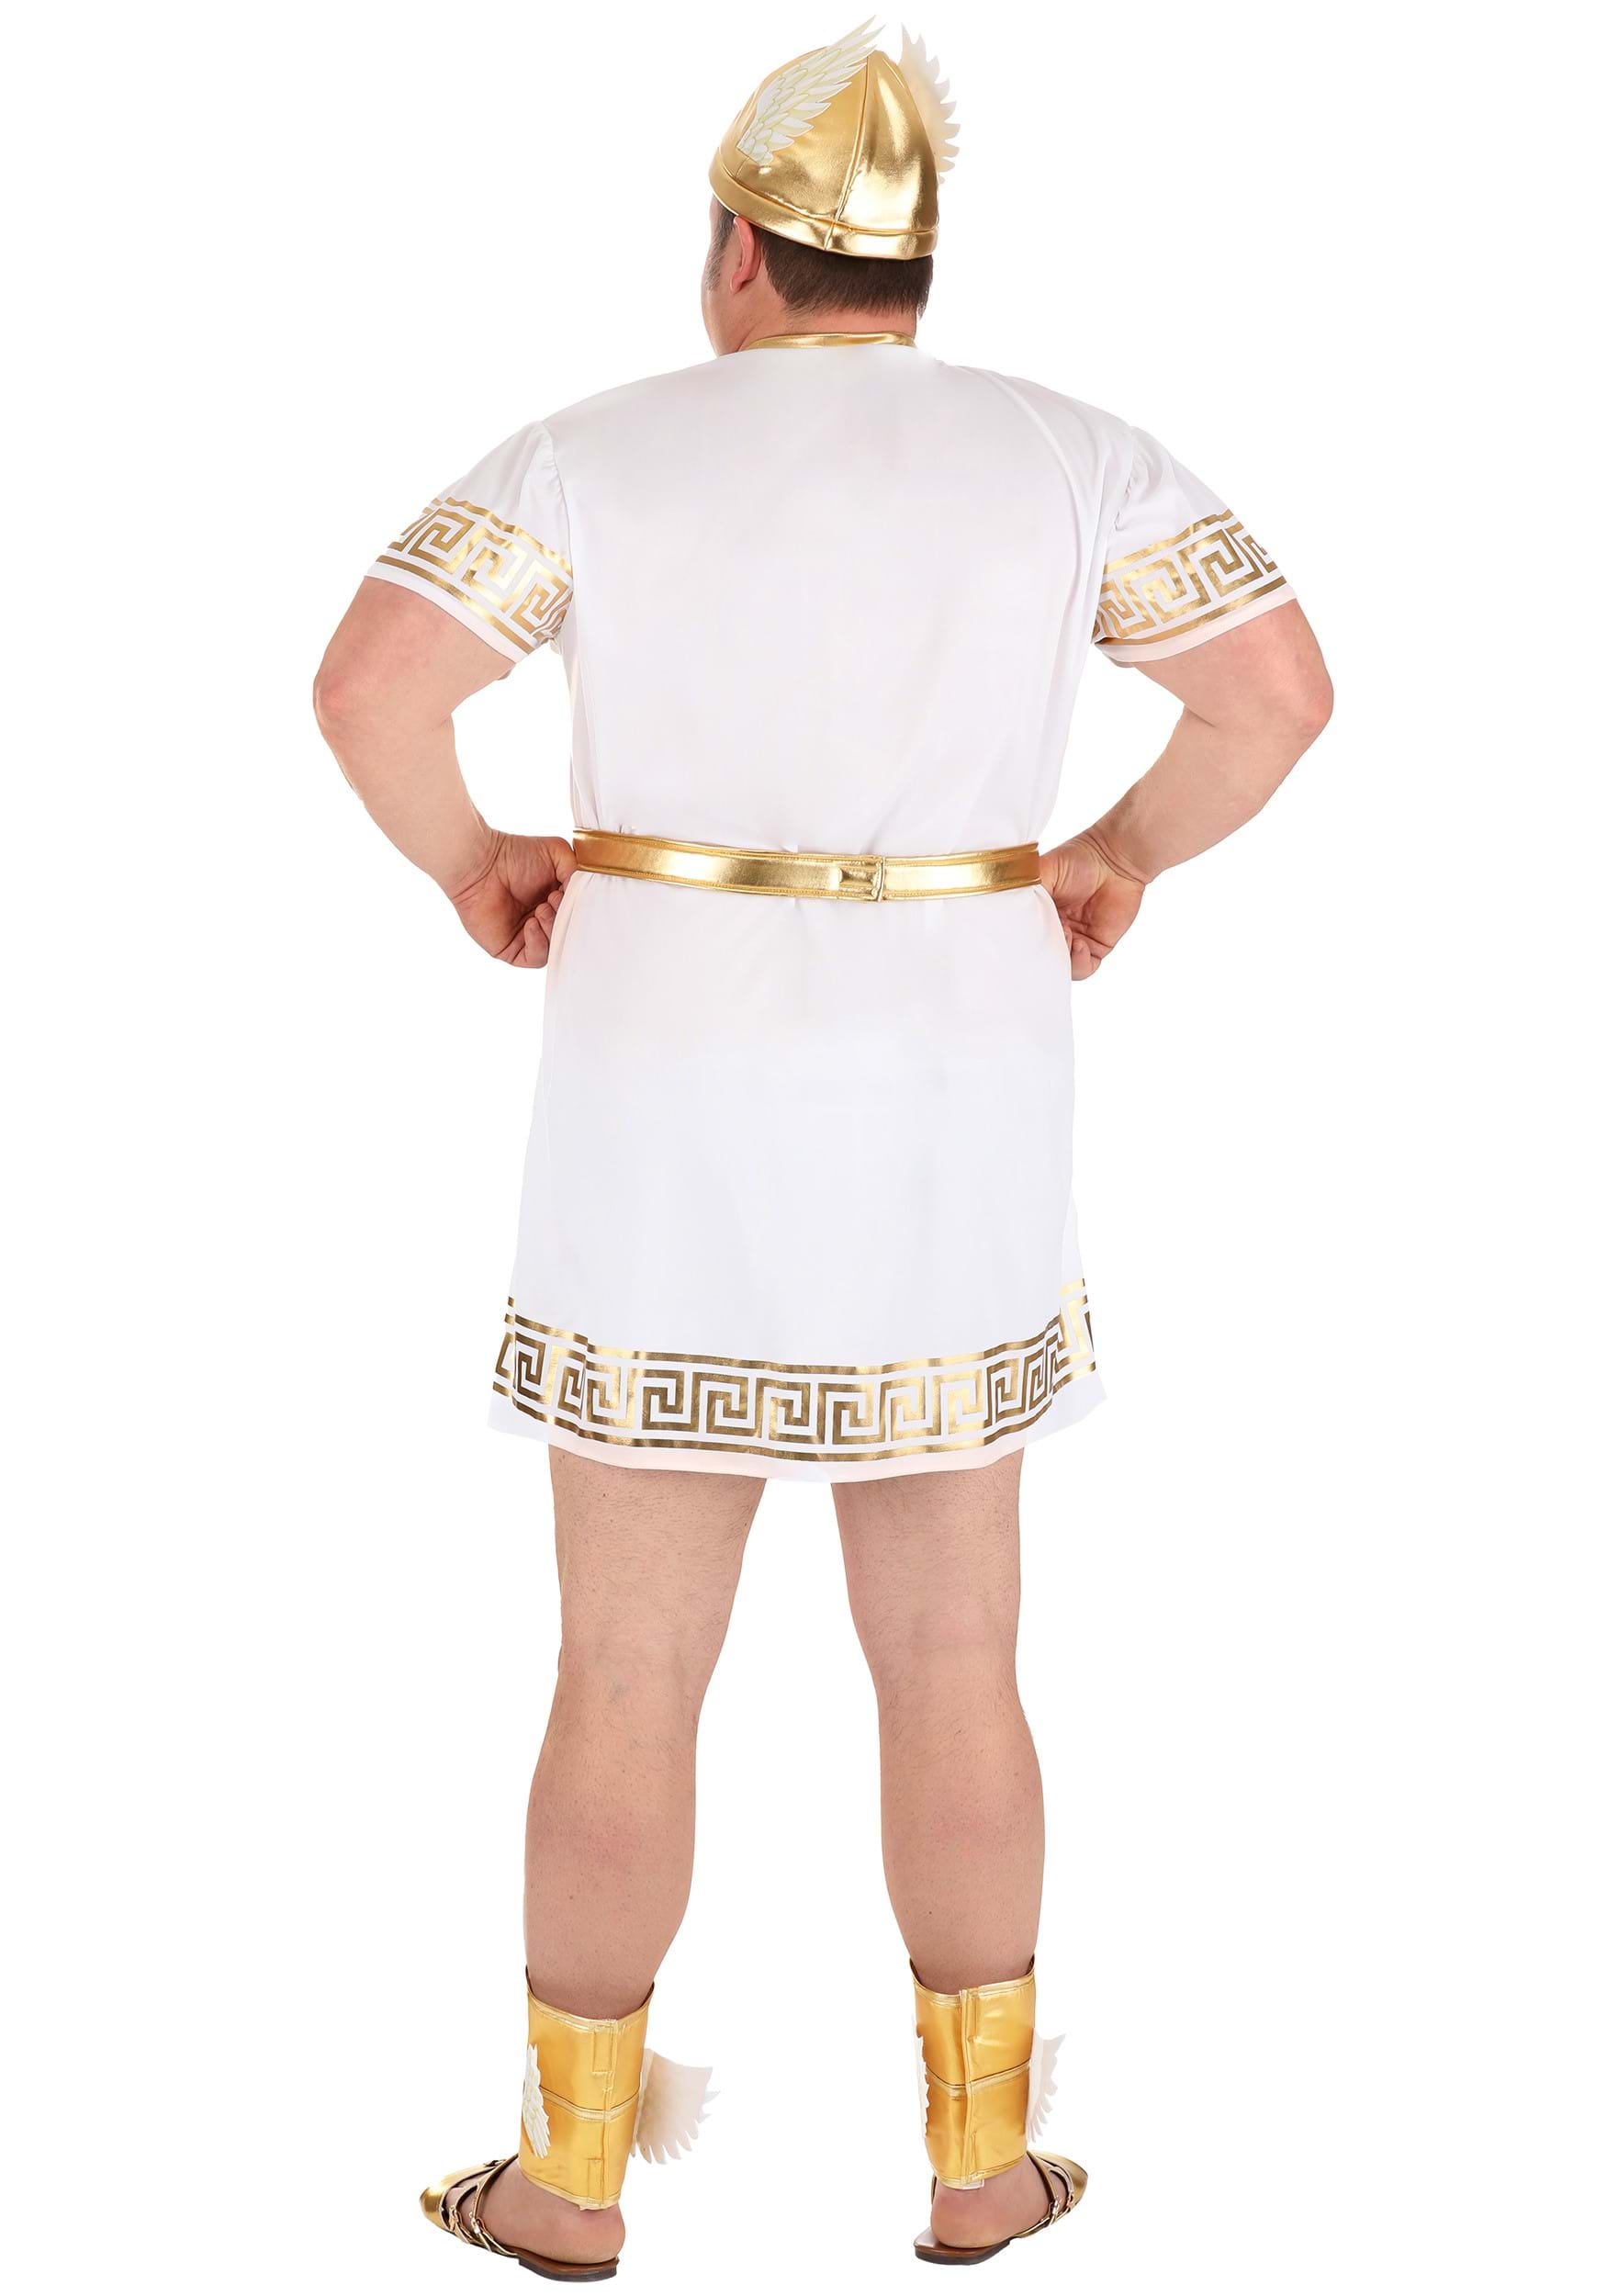 Plus Size Hermes Men's Costume | Greek God Costumes